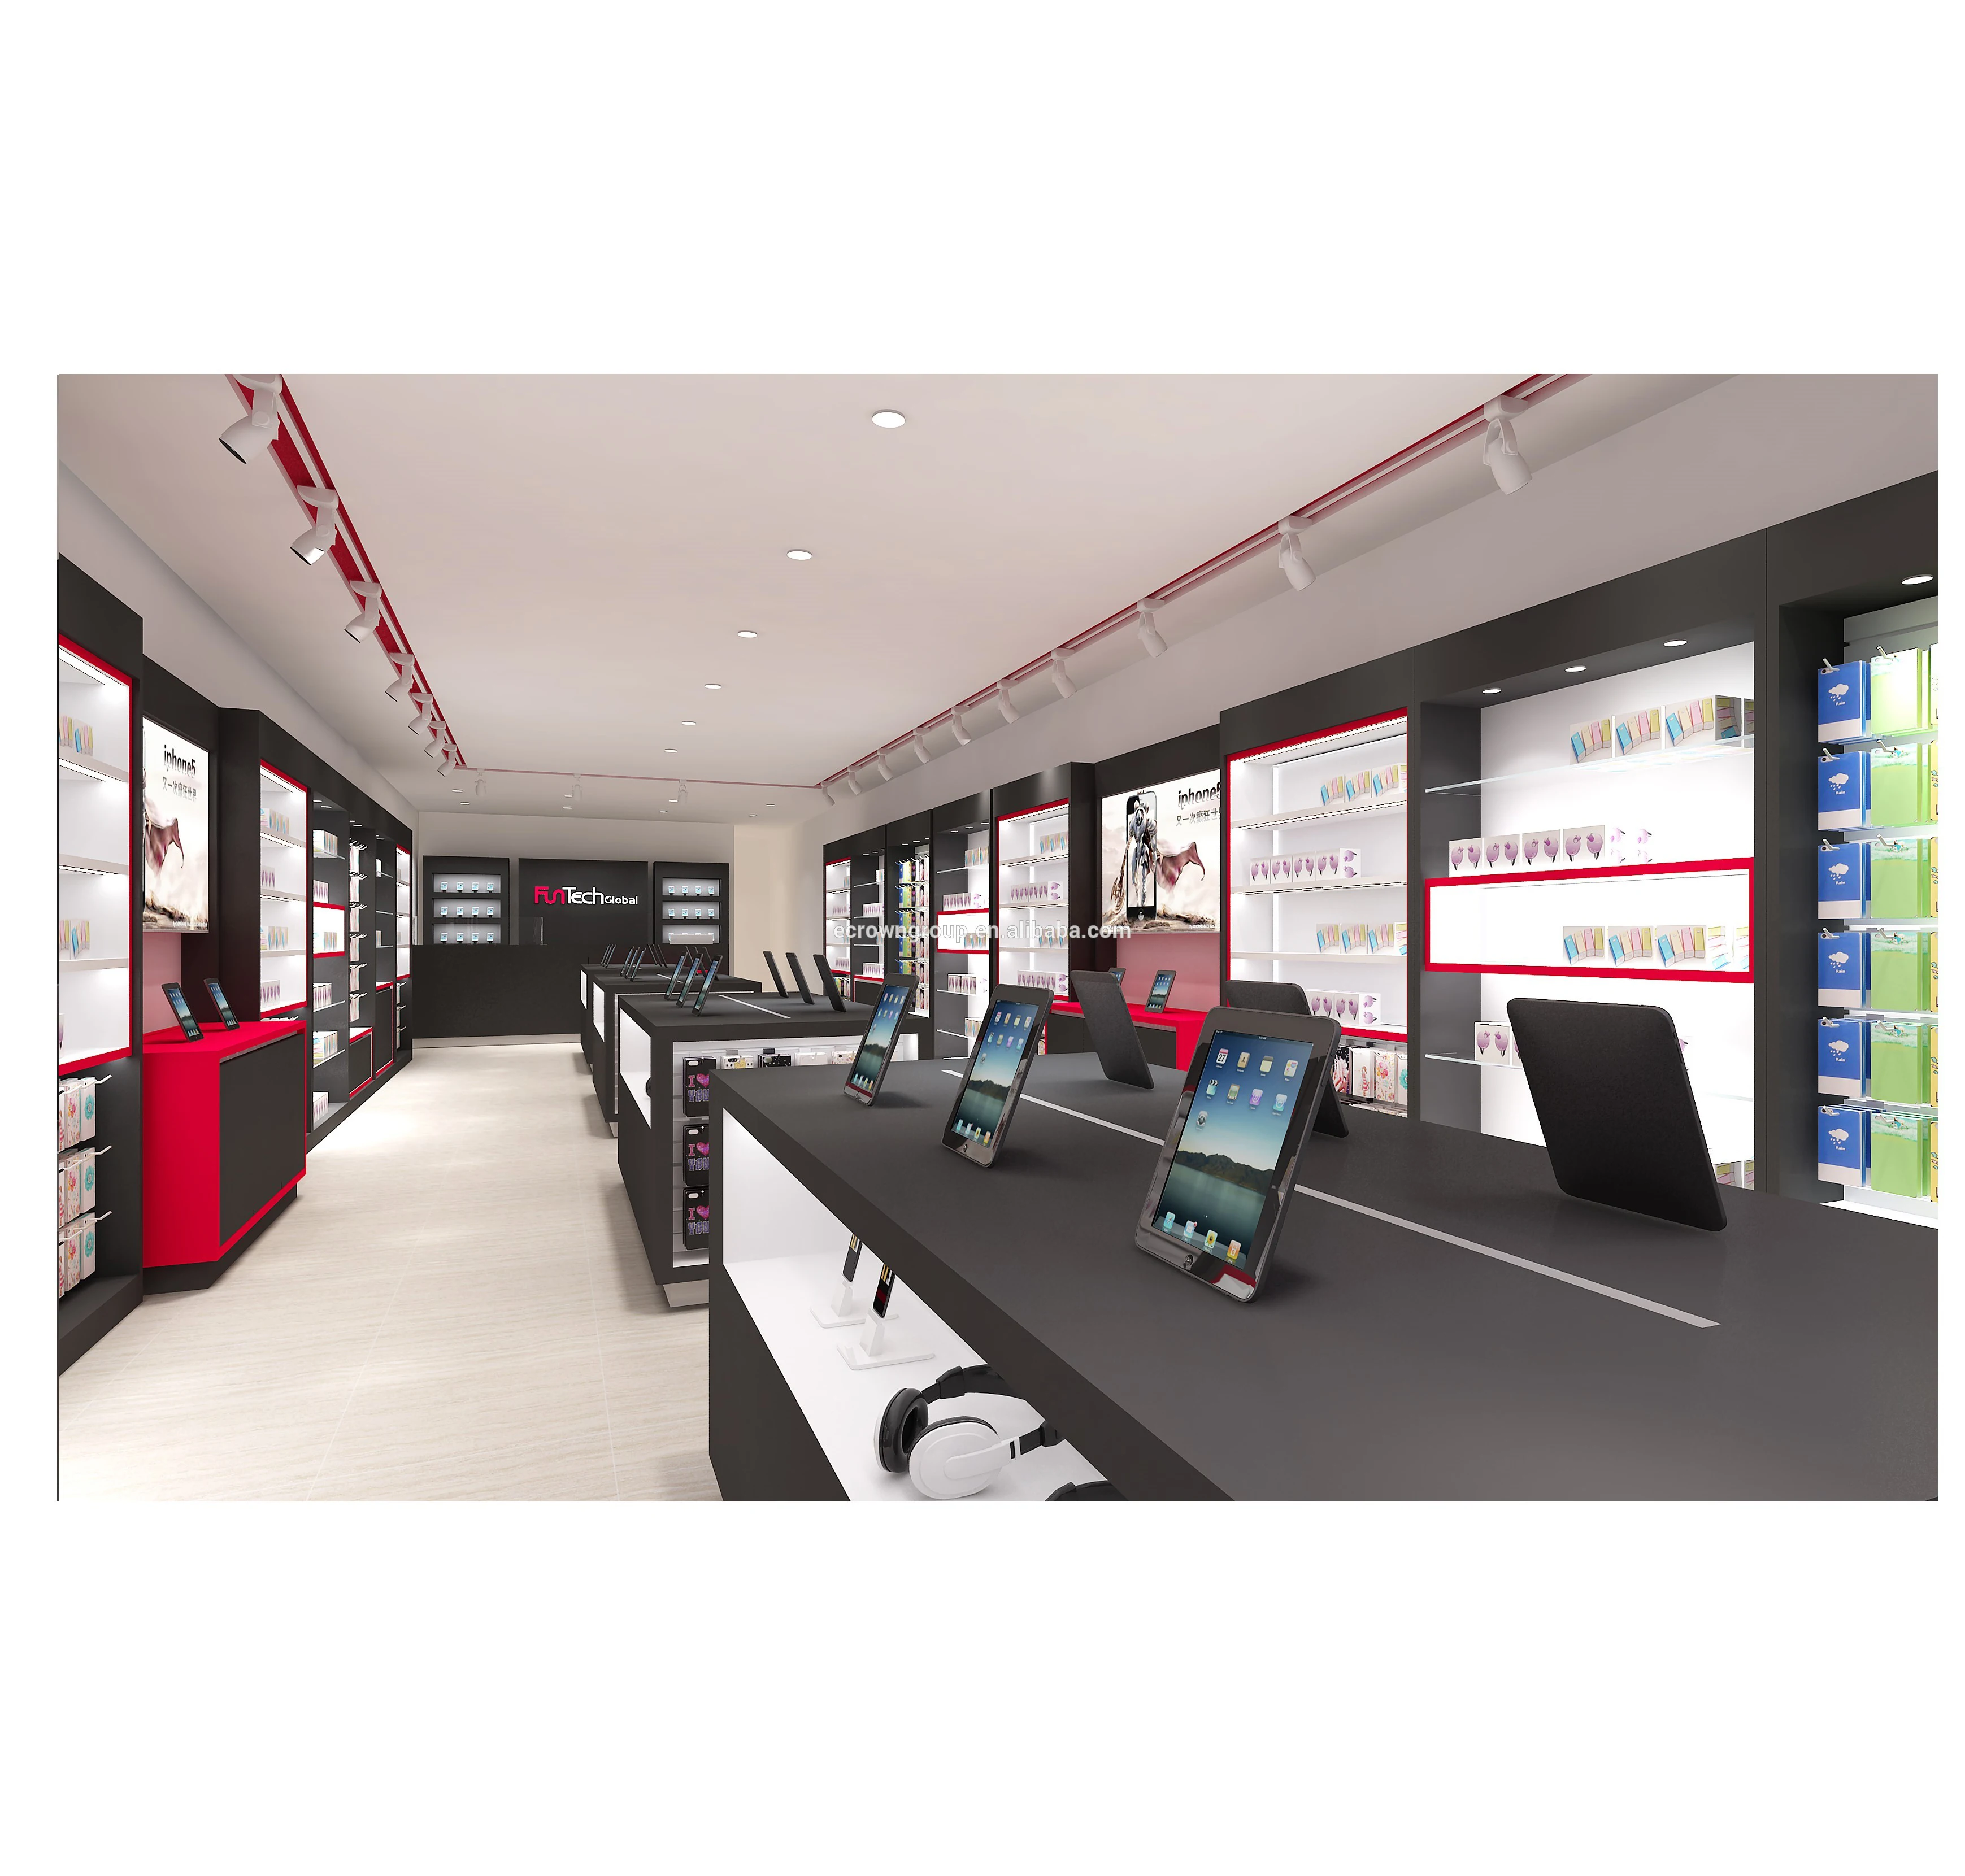 
Mobile Phone Shop Interior Display Showcase Design laptop store furniture 